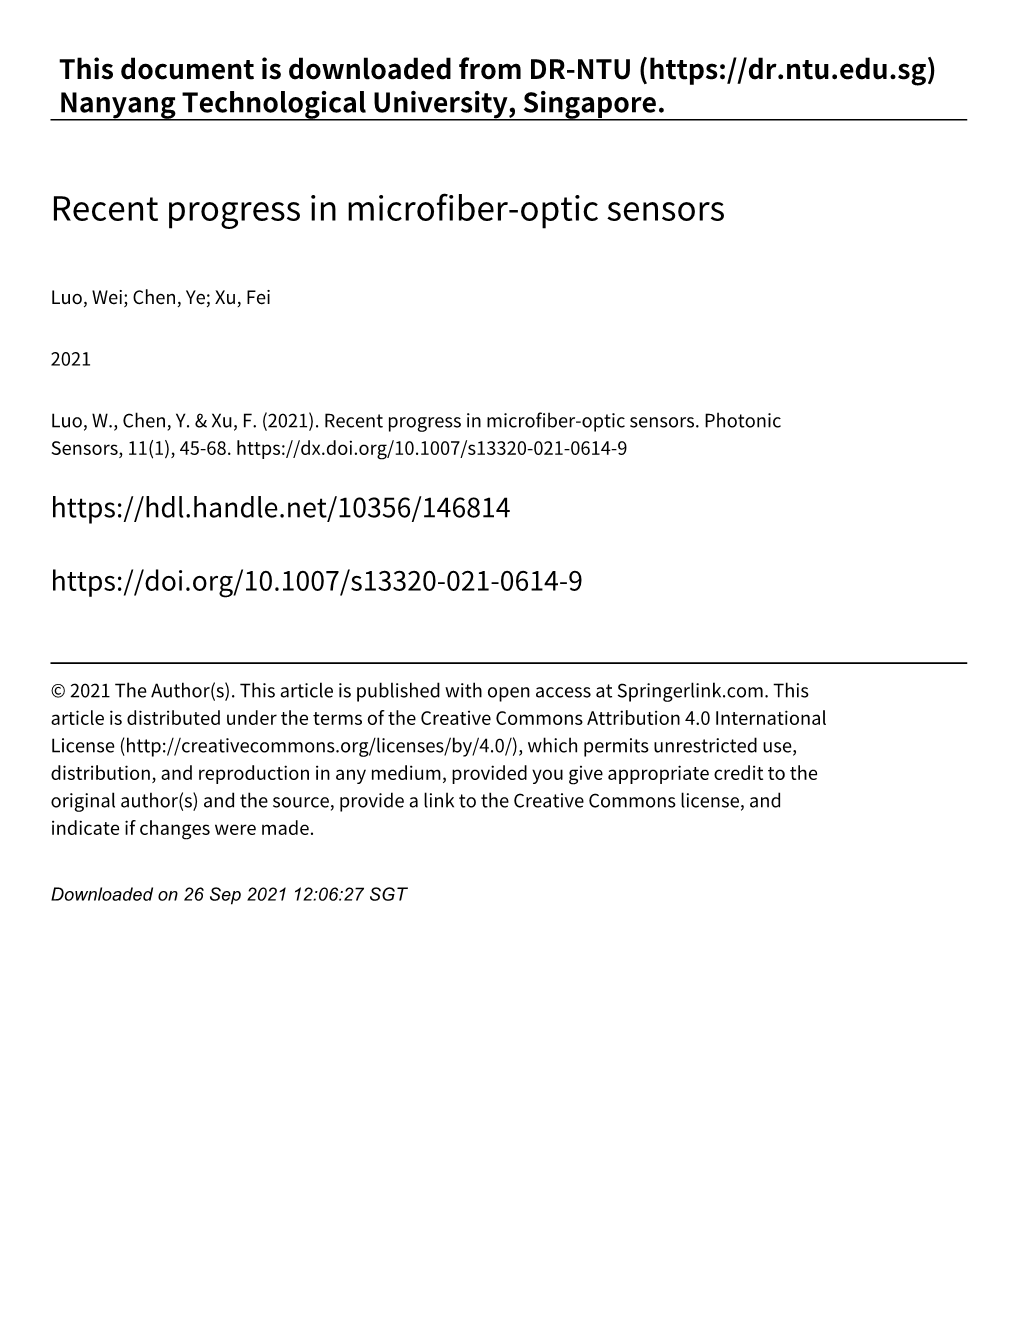 Recent Progress in Microfiber‑Optic Sensors